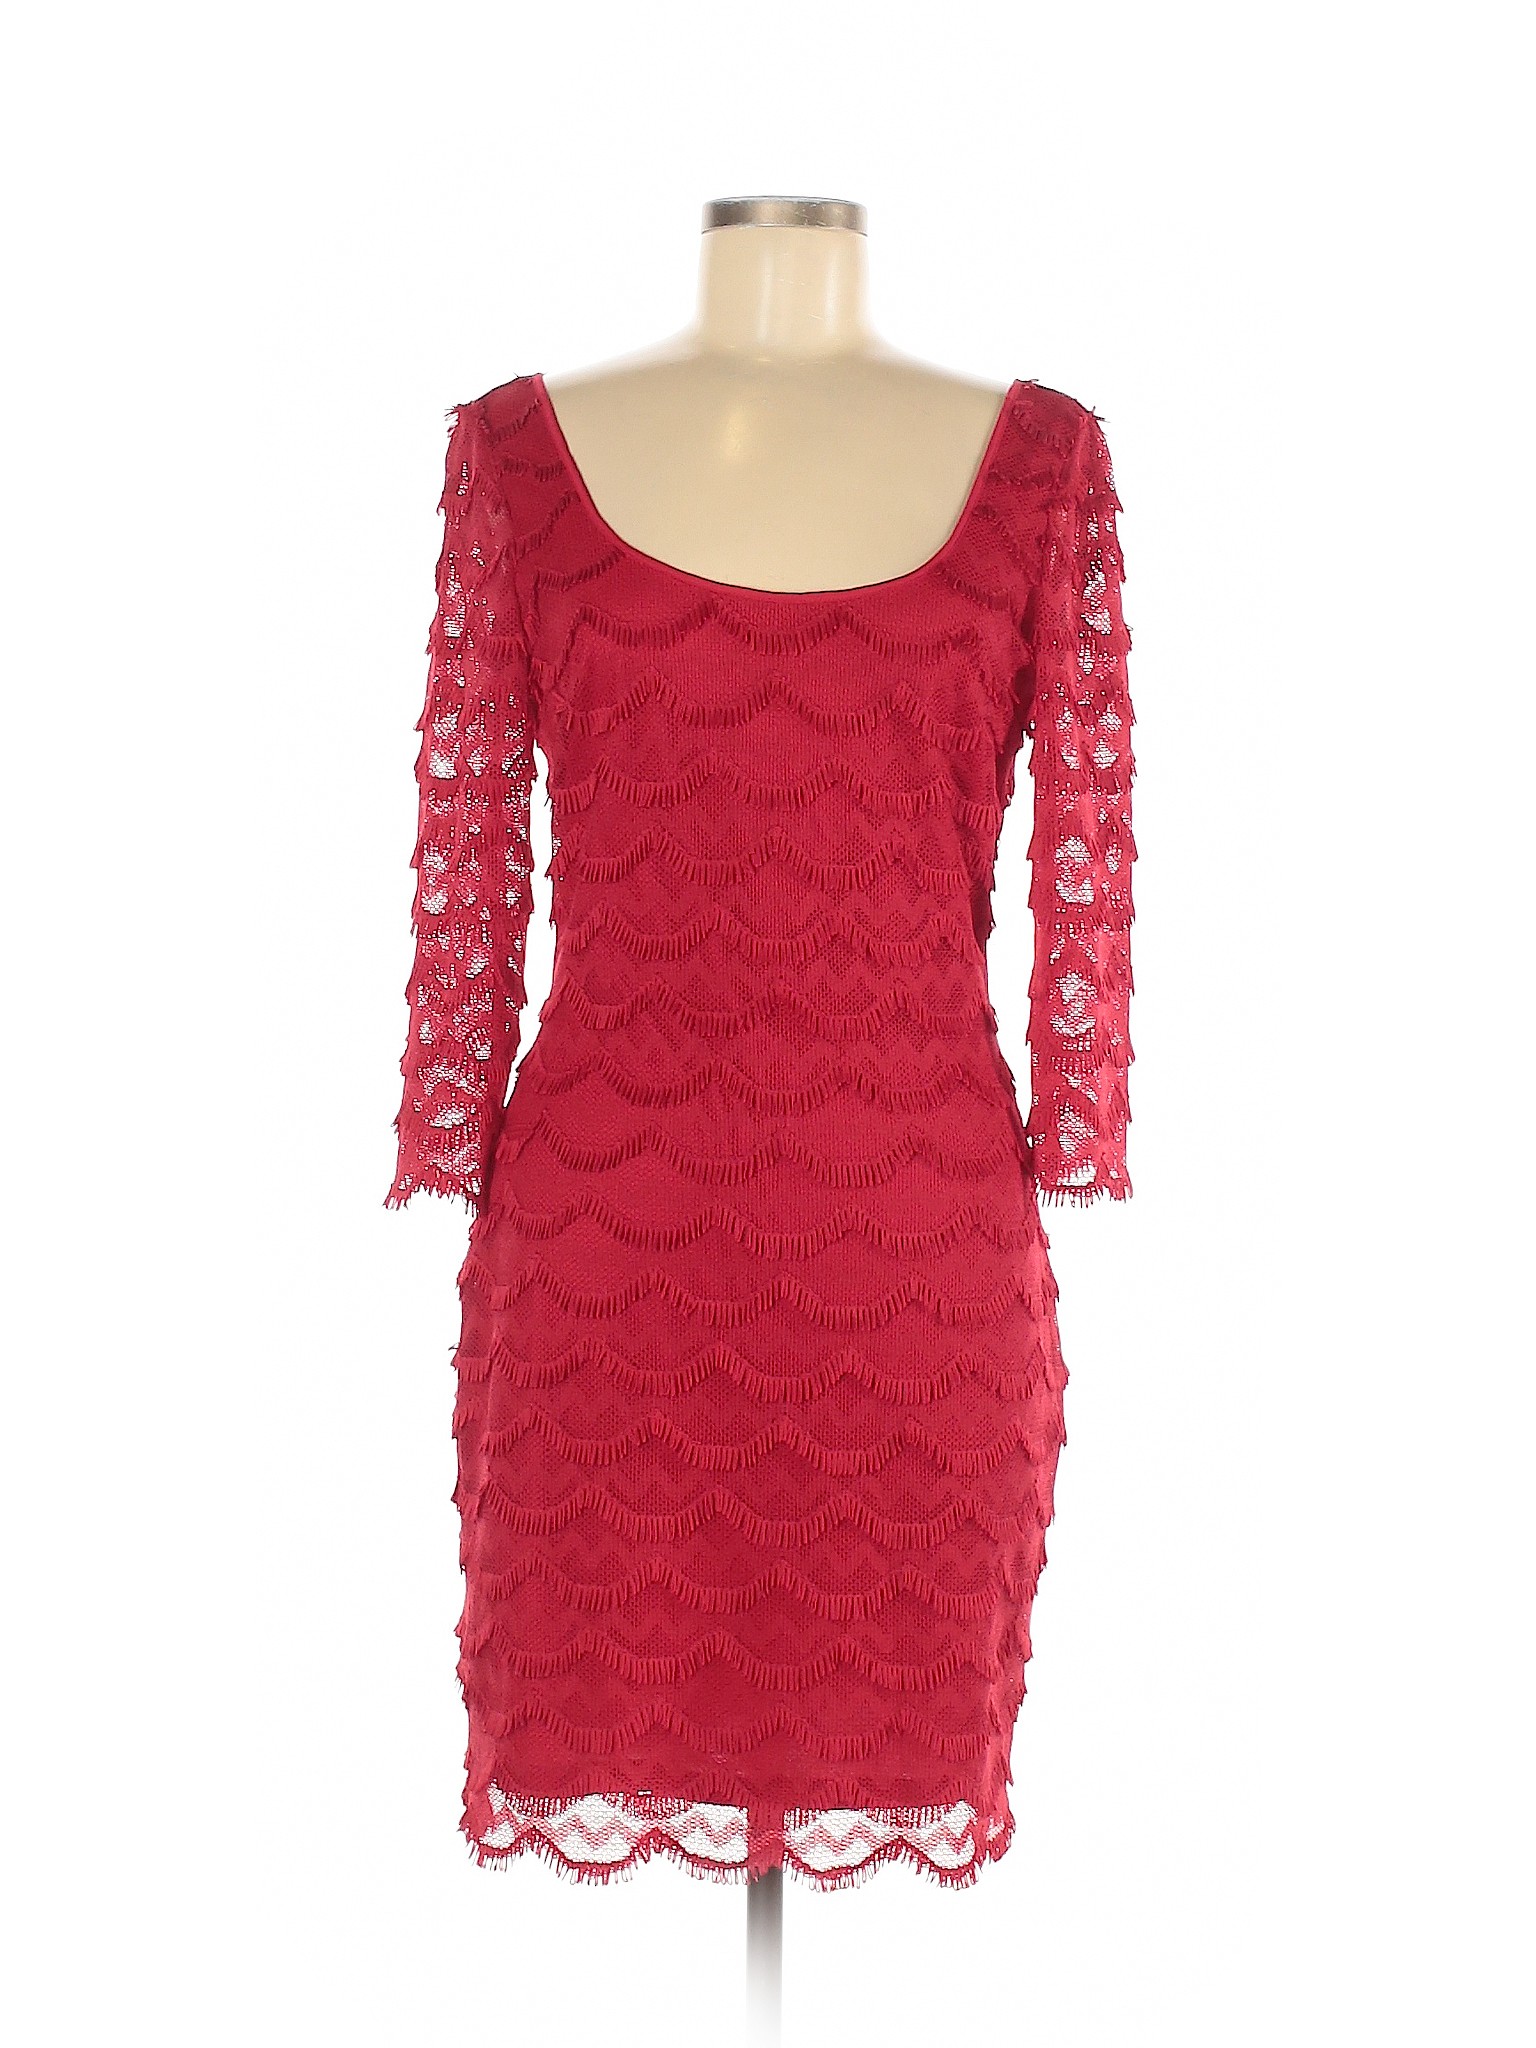 Guess Women Red Cocktail Dress 8 | eBay